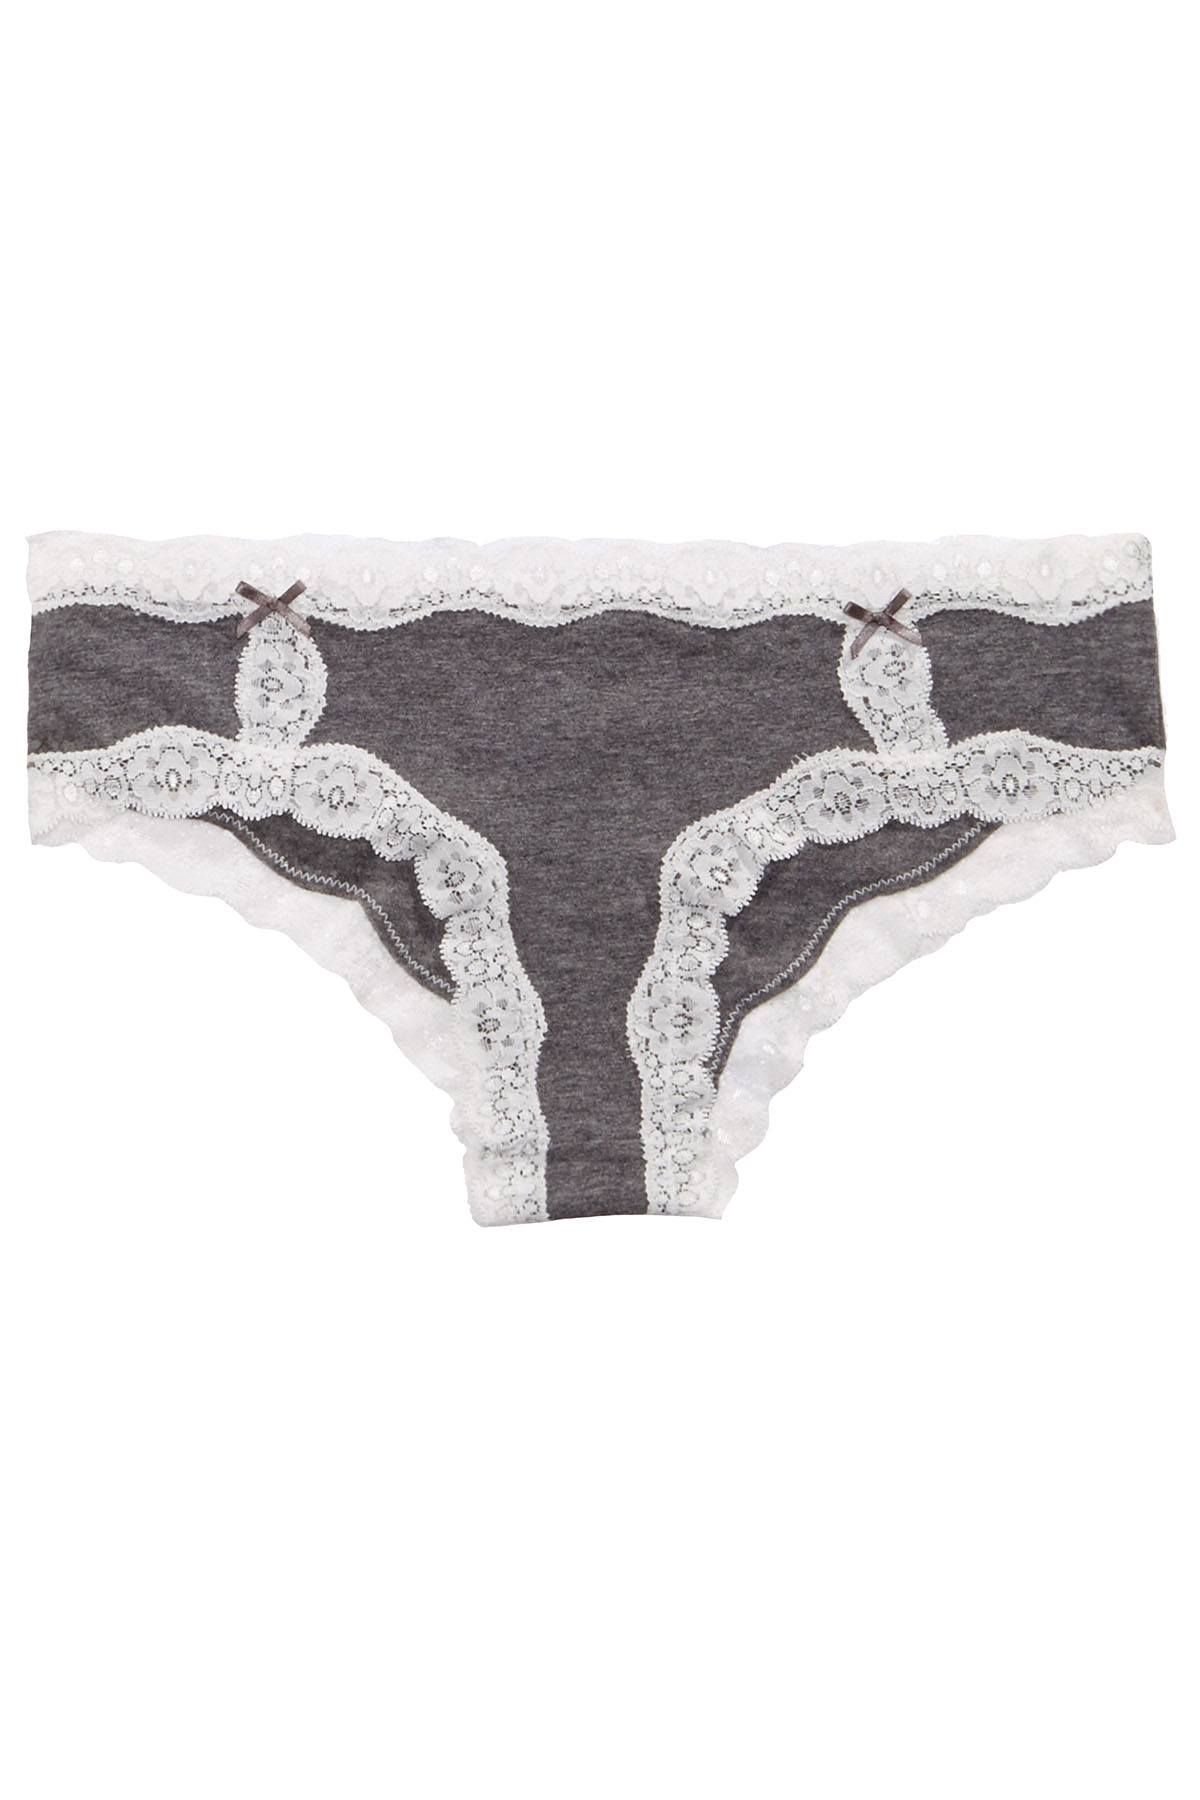 Jenni Women's Lace Trim Hipster Underwears, Gray, XX-Large